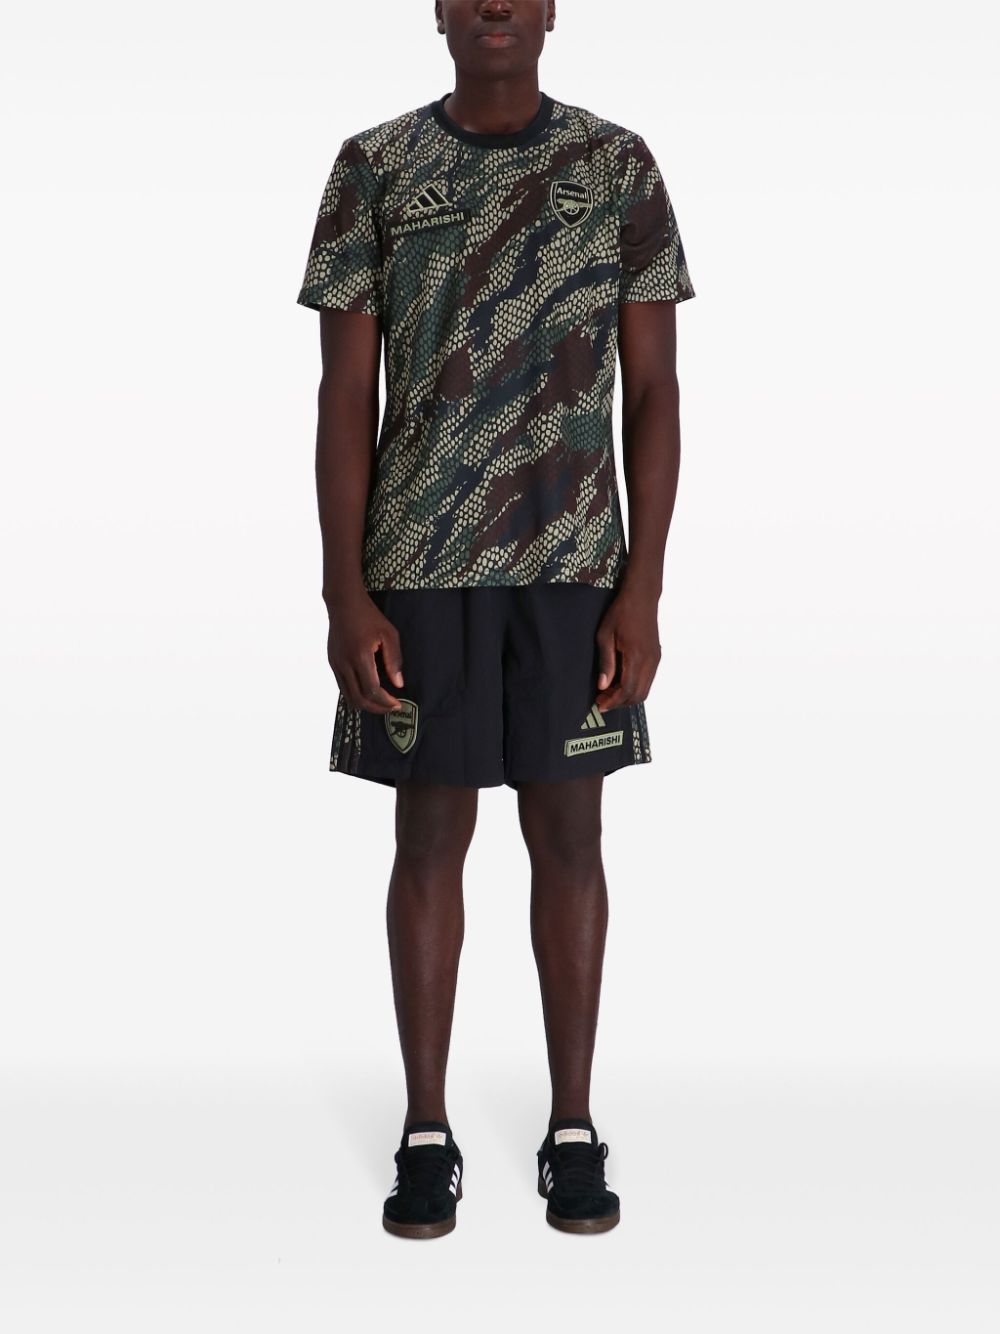 Adidas x Arsenal x Maharishi camouflage-print Jersey - Farfetch